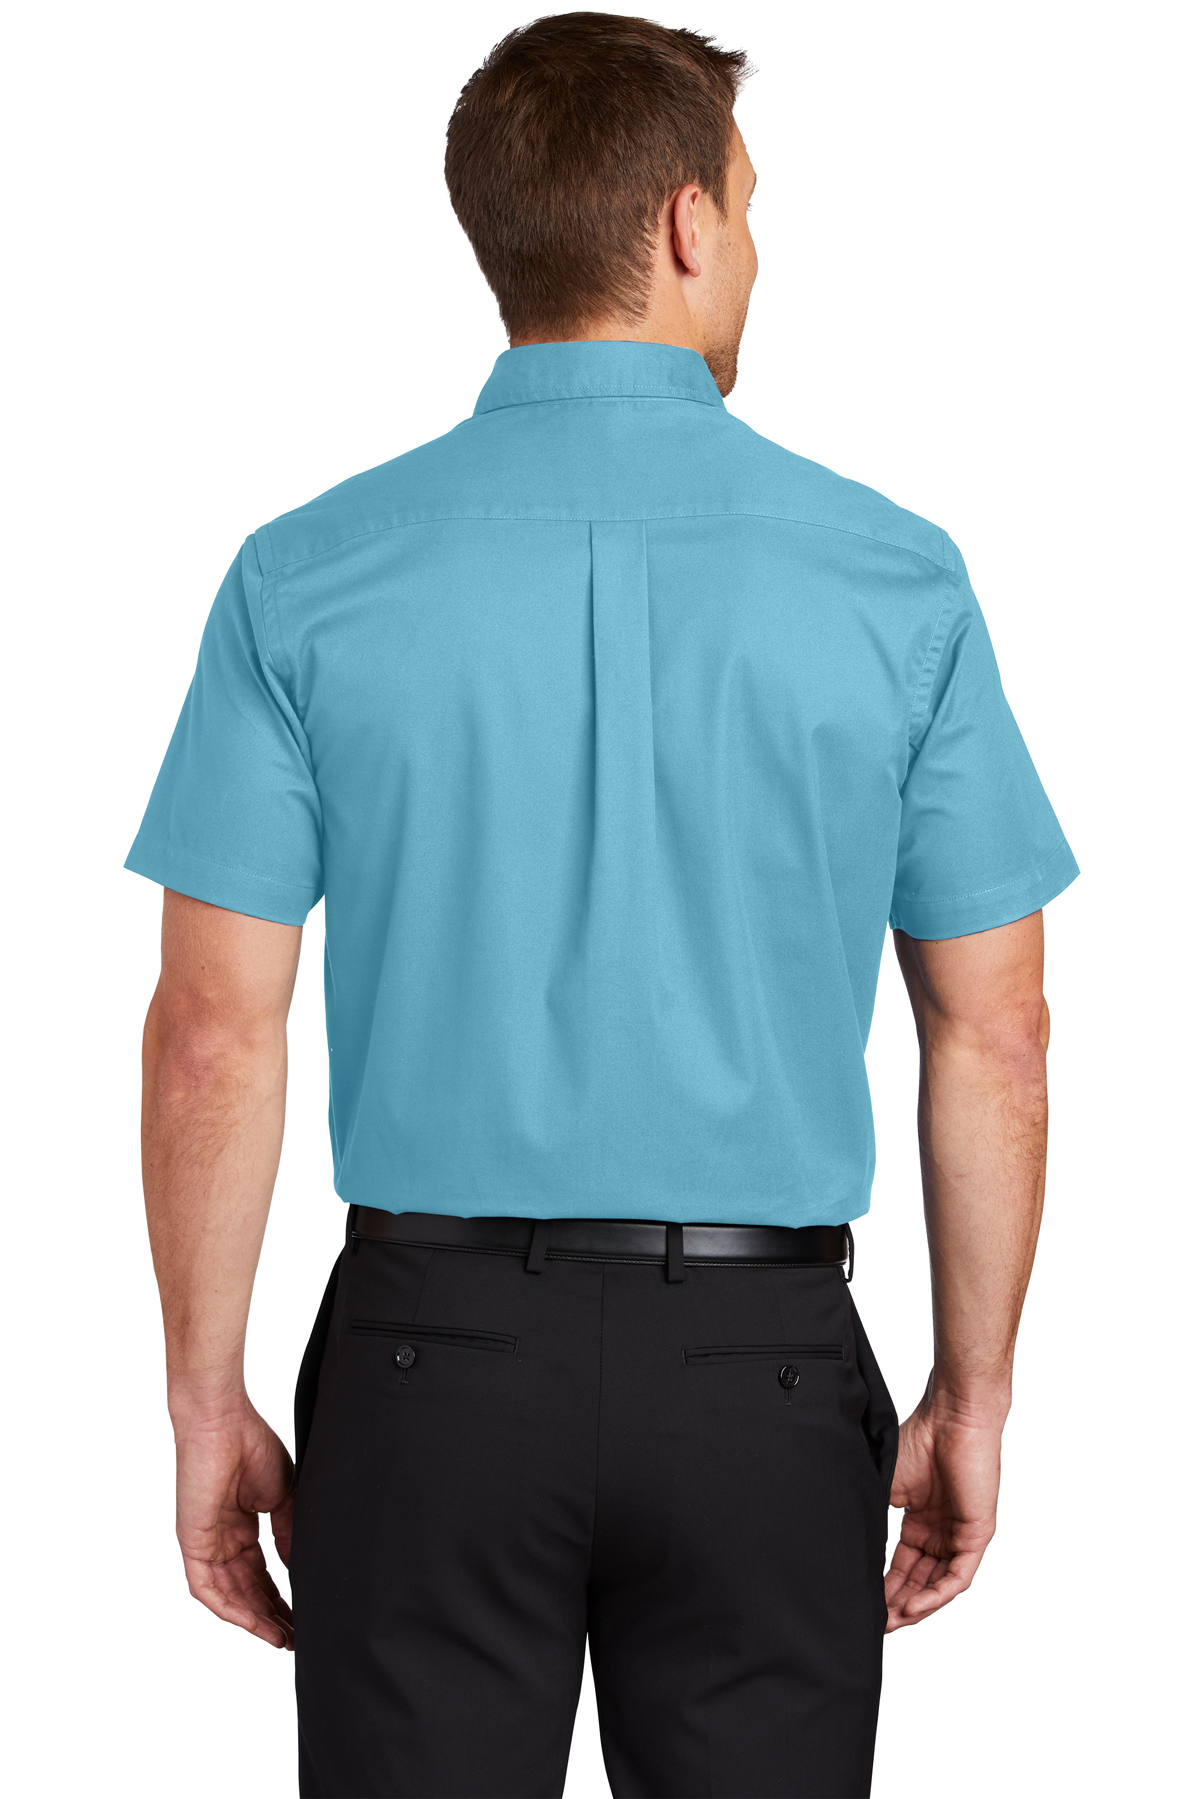 Port Authority Tall Short Sleeve Custom Easy Care Shirts, Teal Green